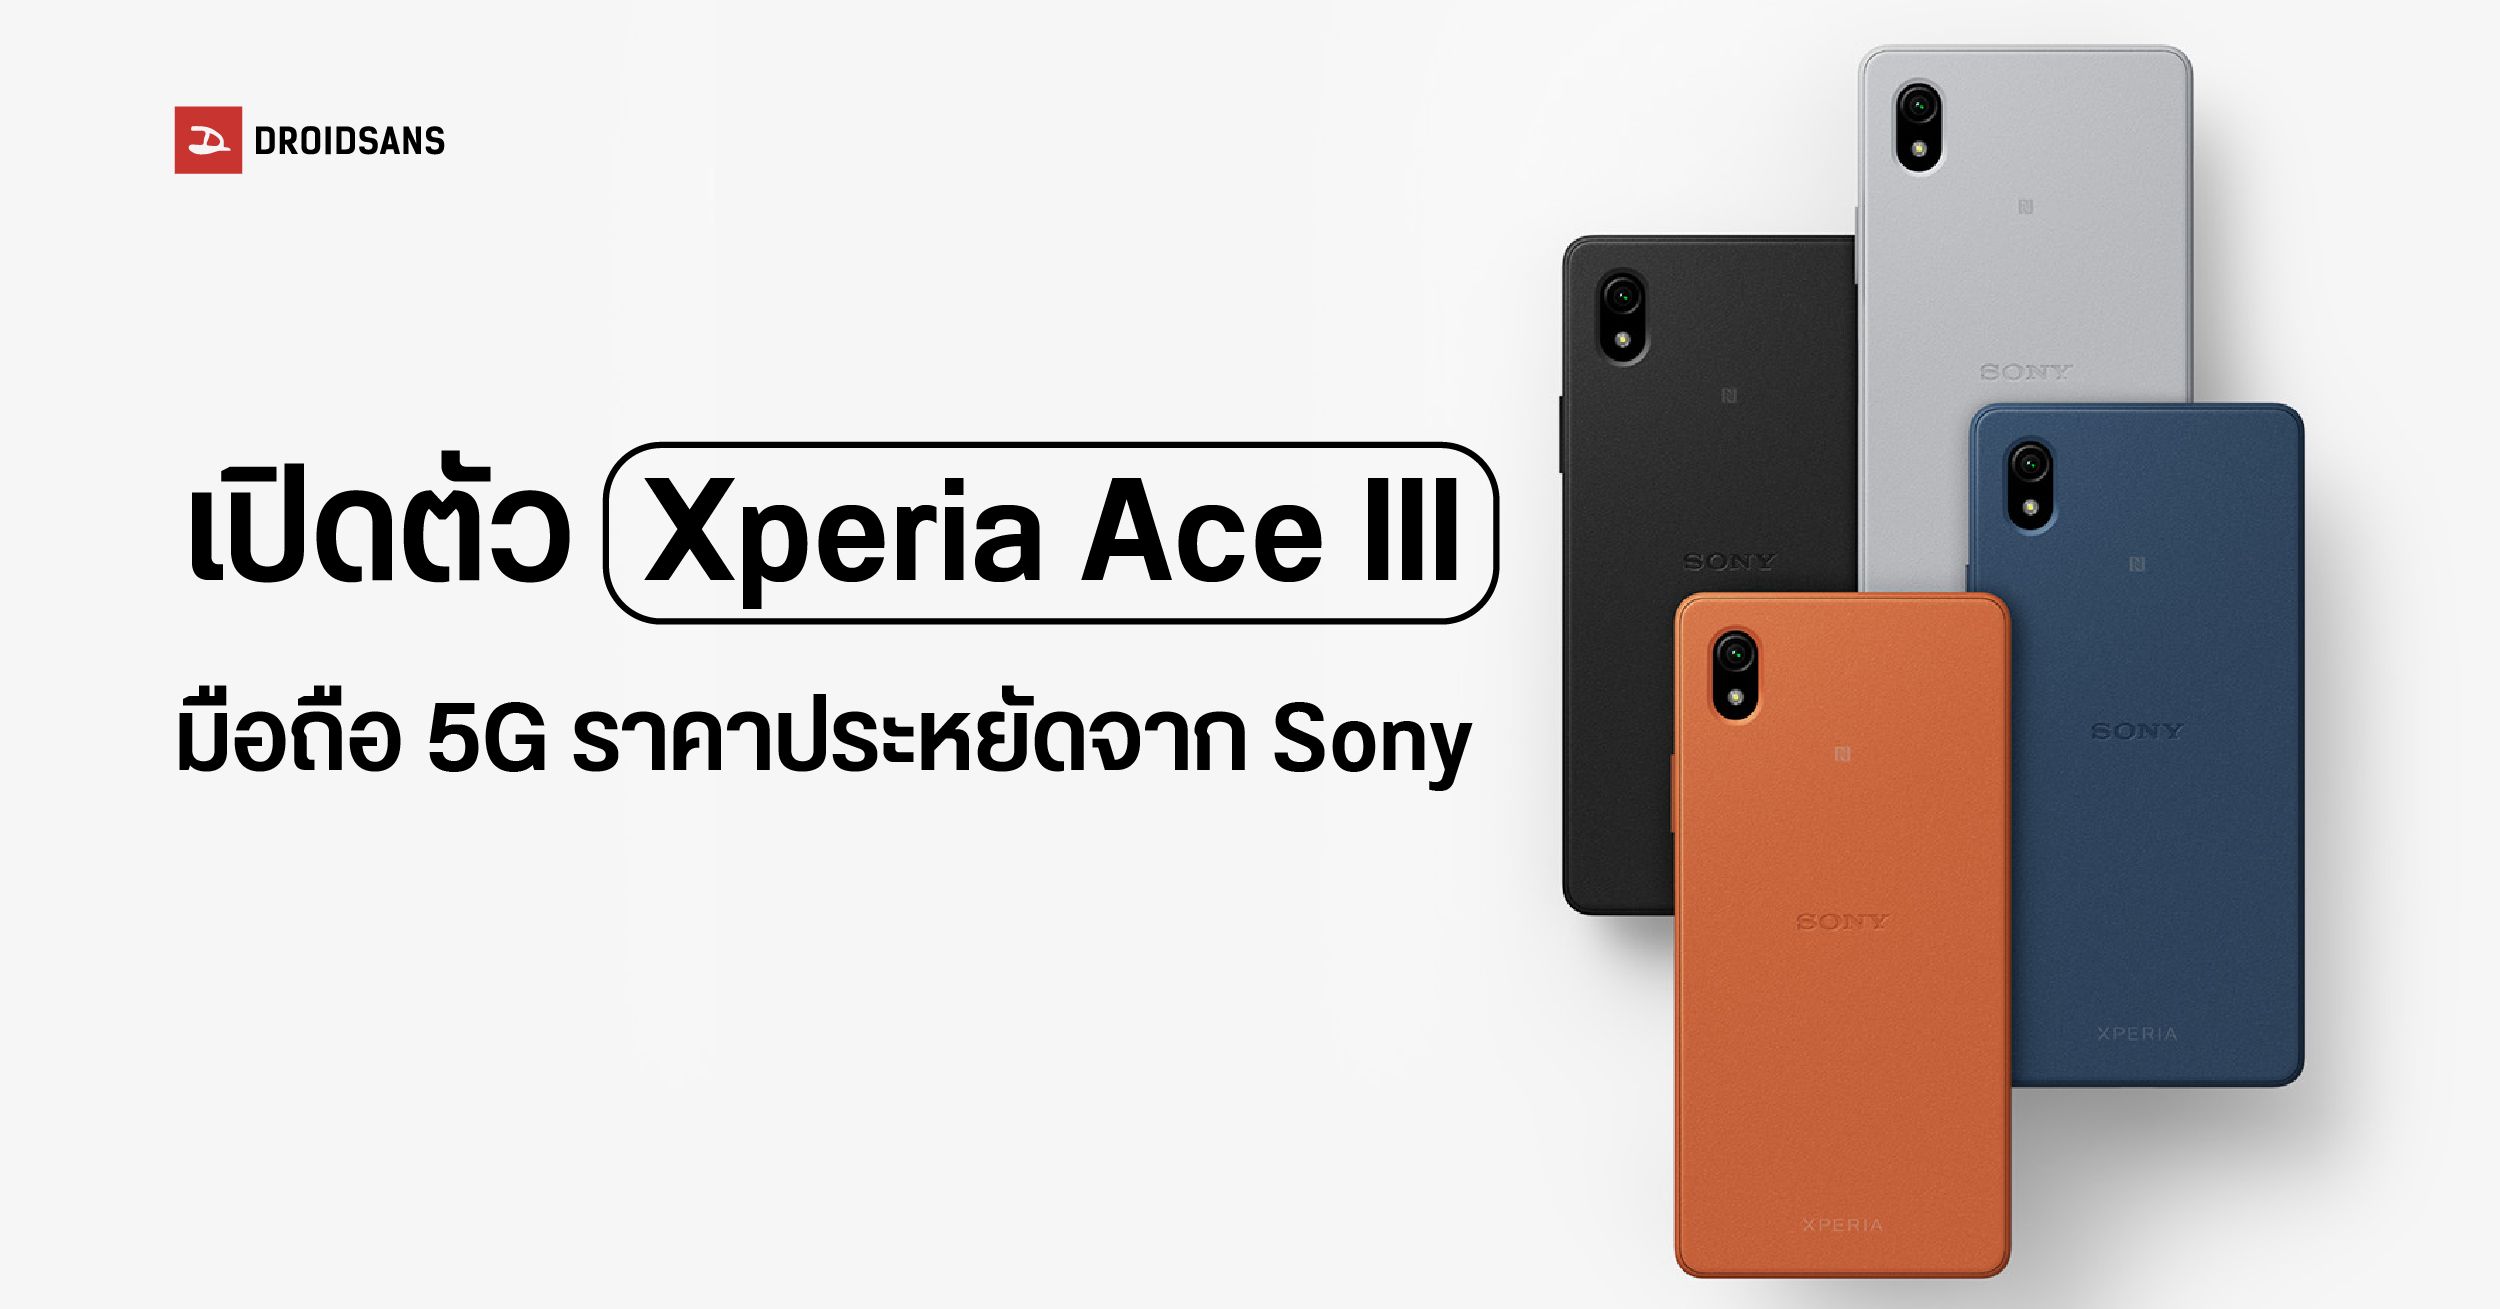 Sony Xperia Ace III มือถือ 5G ไซส์กระทัดรัด หน้าจอ 5.5 นิ้ว, ชิป SD 480, แบตเตอรี่ 4,500 mAh เปิดราคาไม่ถึงหมื่นบาท